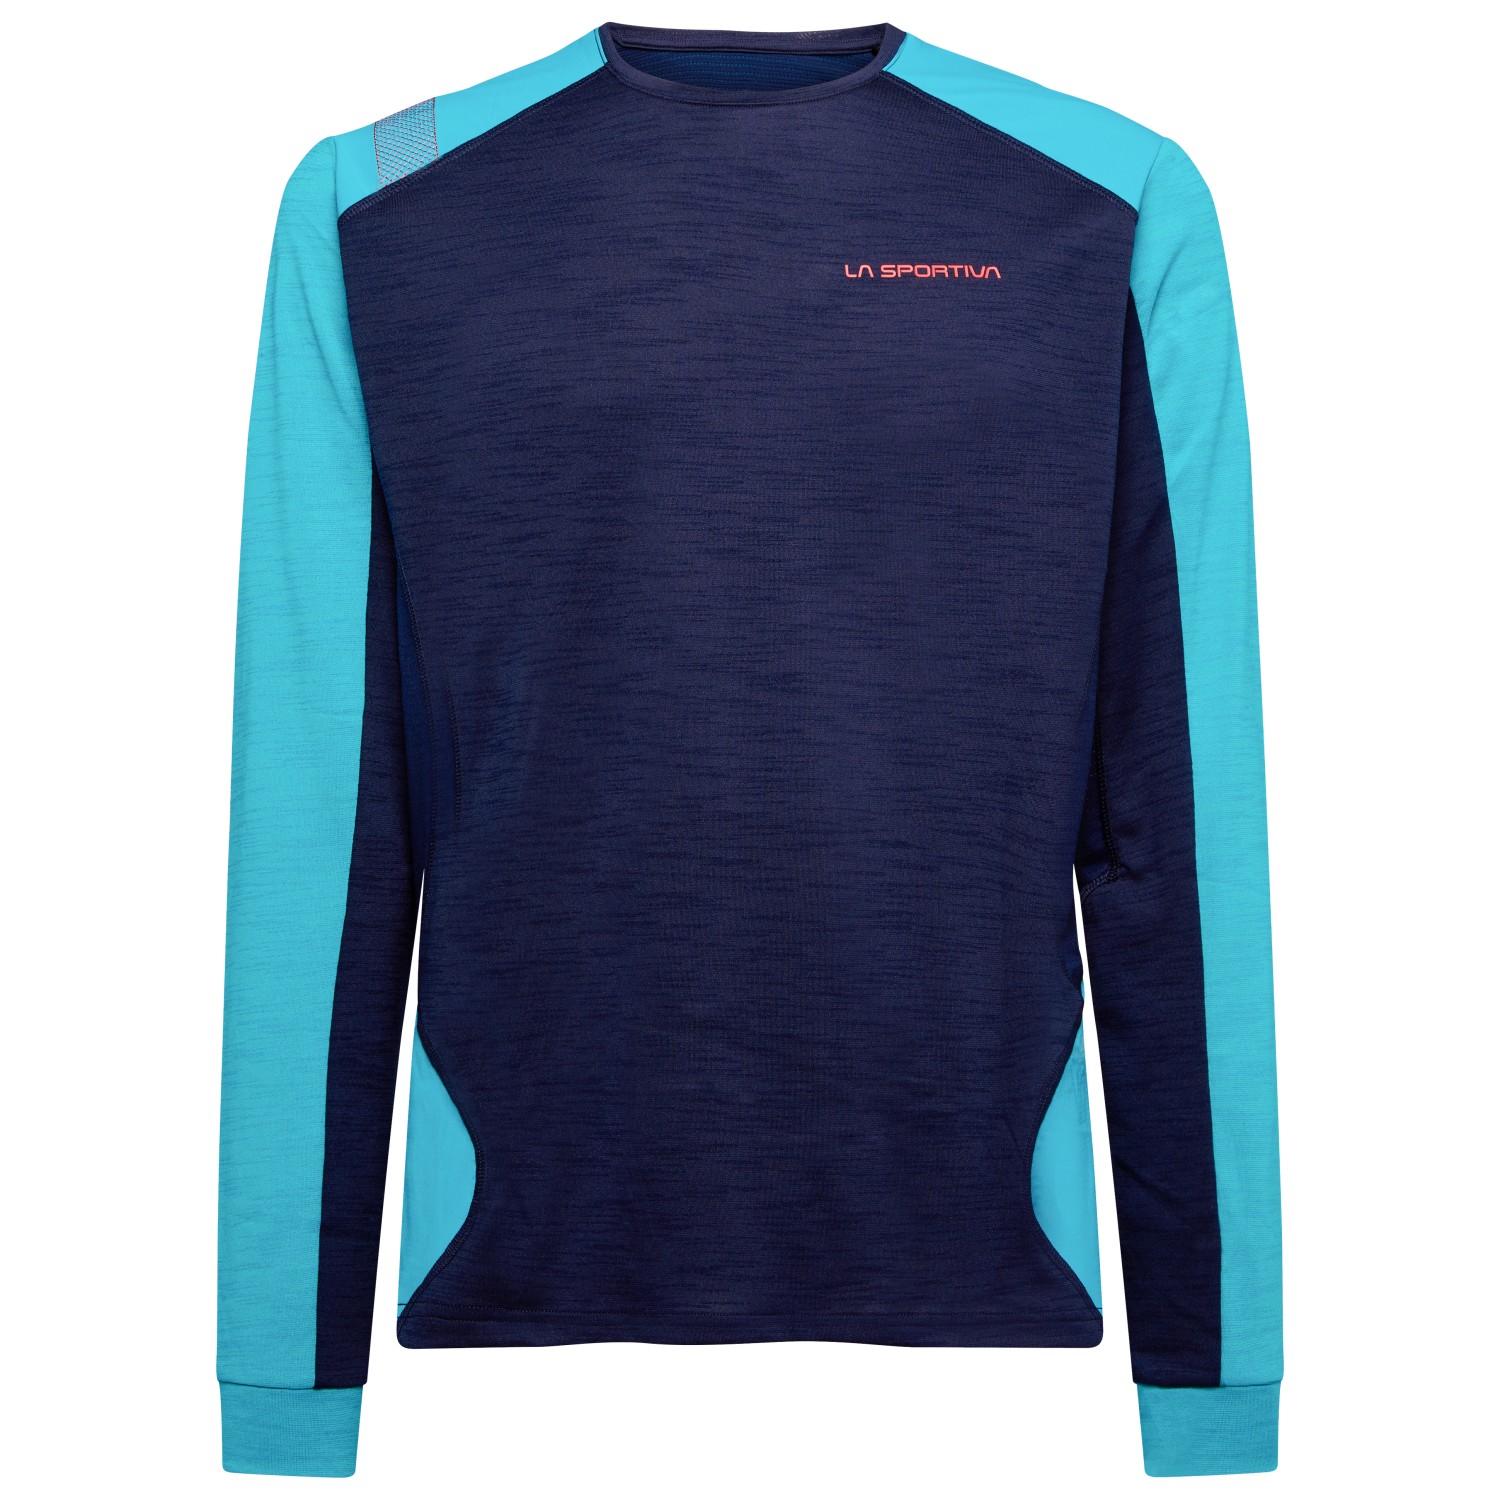 Функциональная рубашка La Sportiva Beyond Long Sleeve, цвет Deep Sea/Tropic Blue